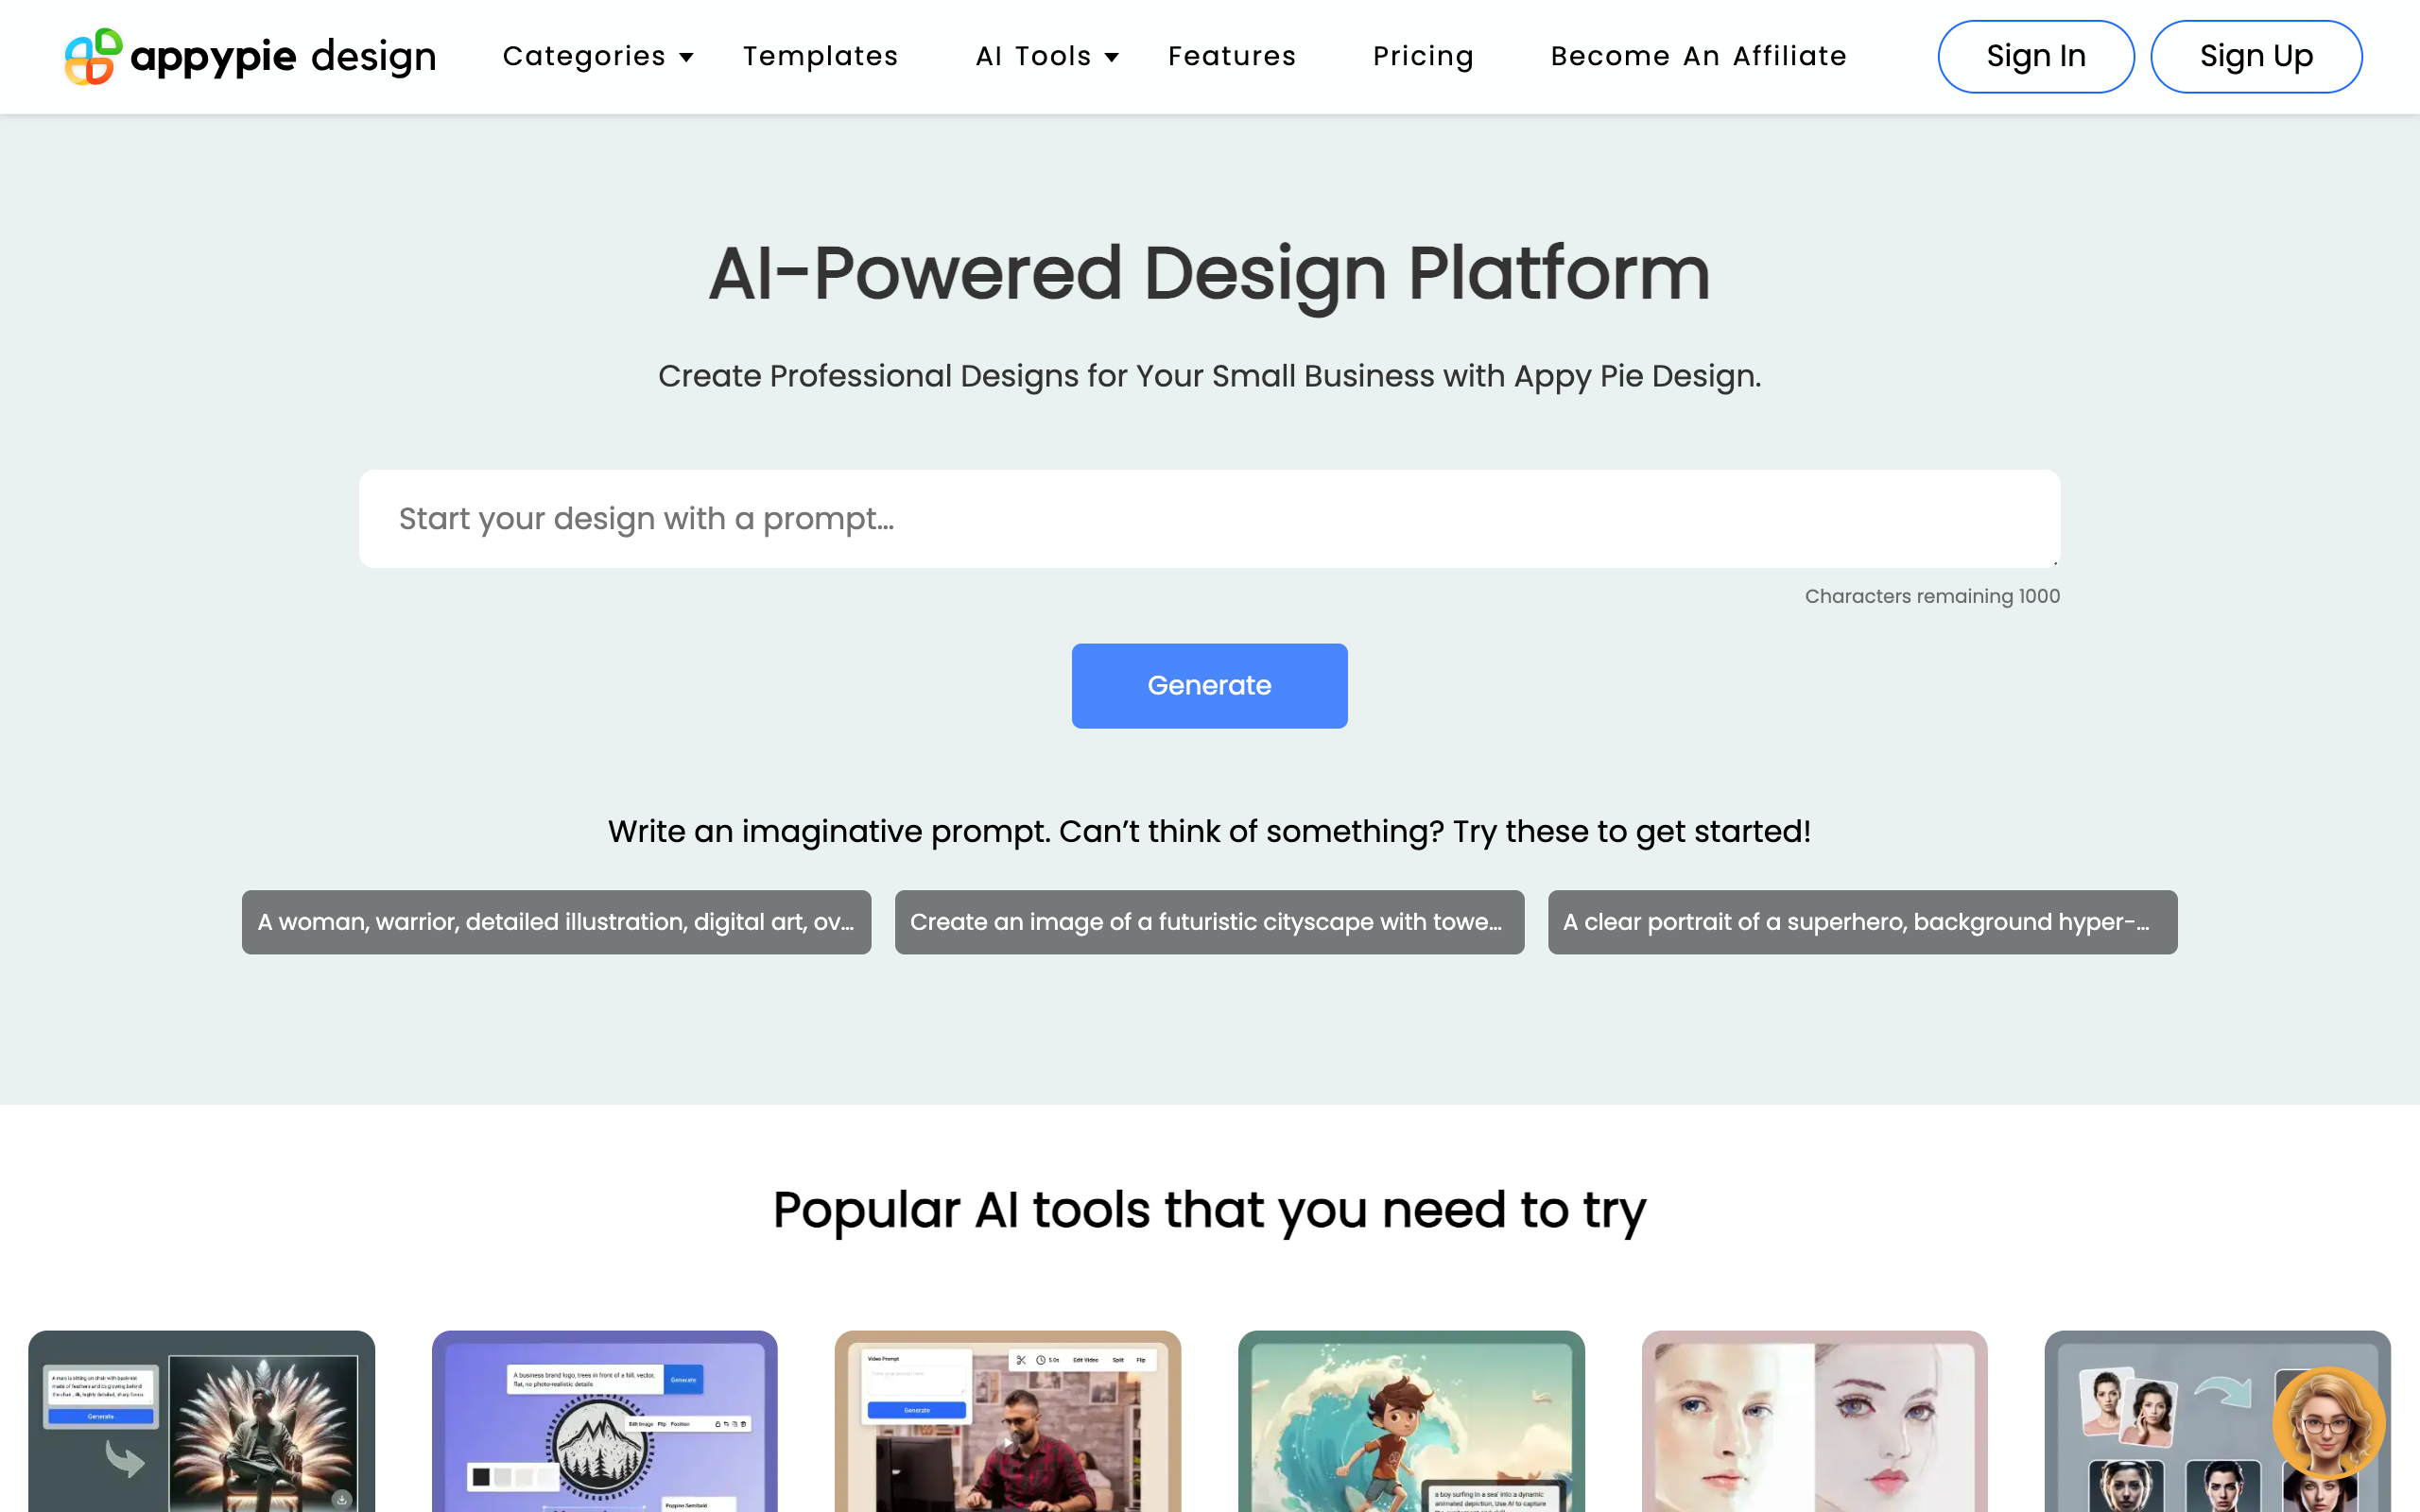 Appy Pie Design tool